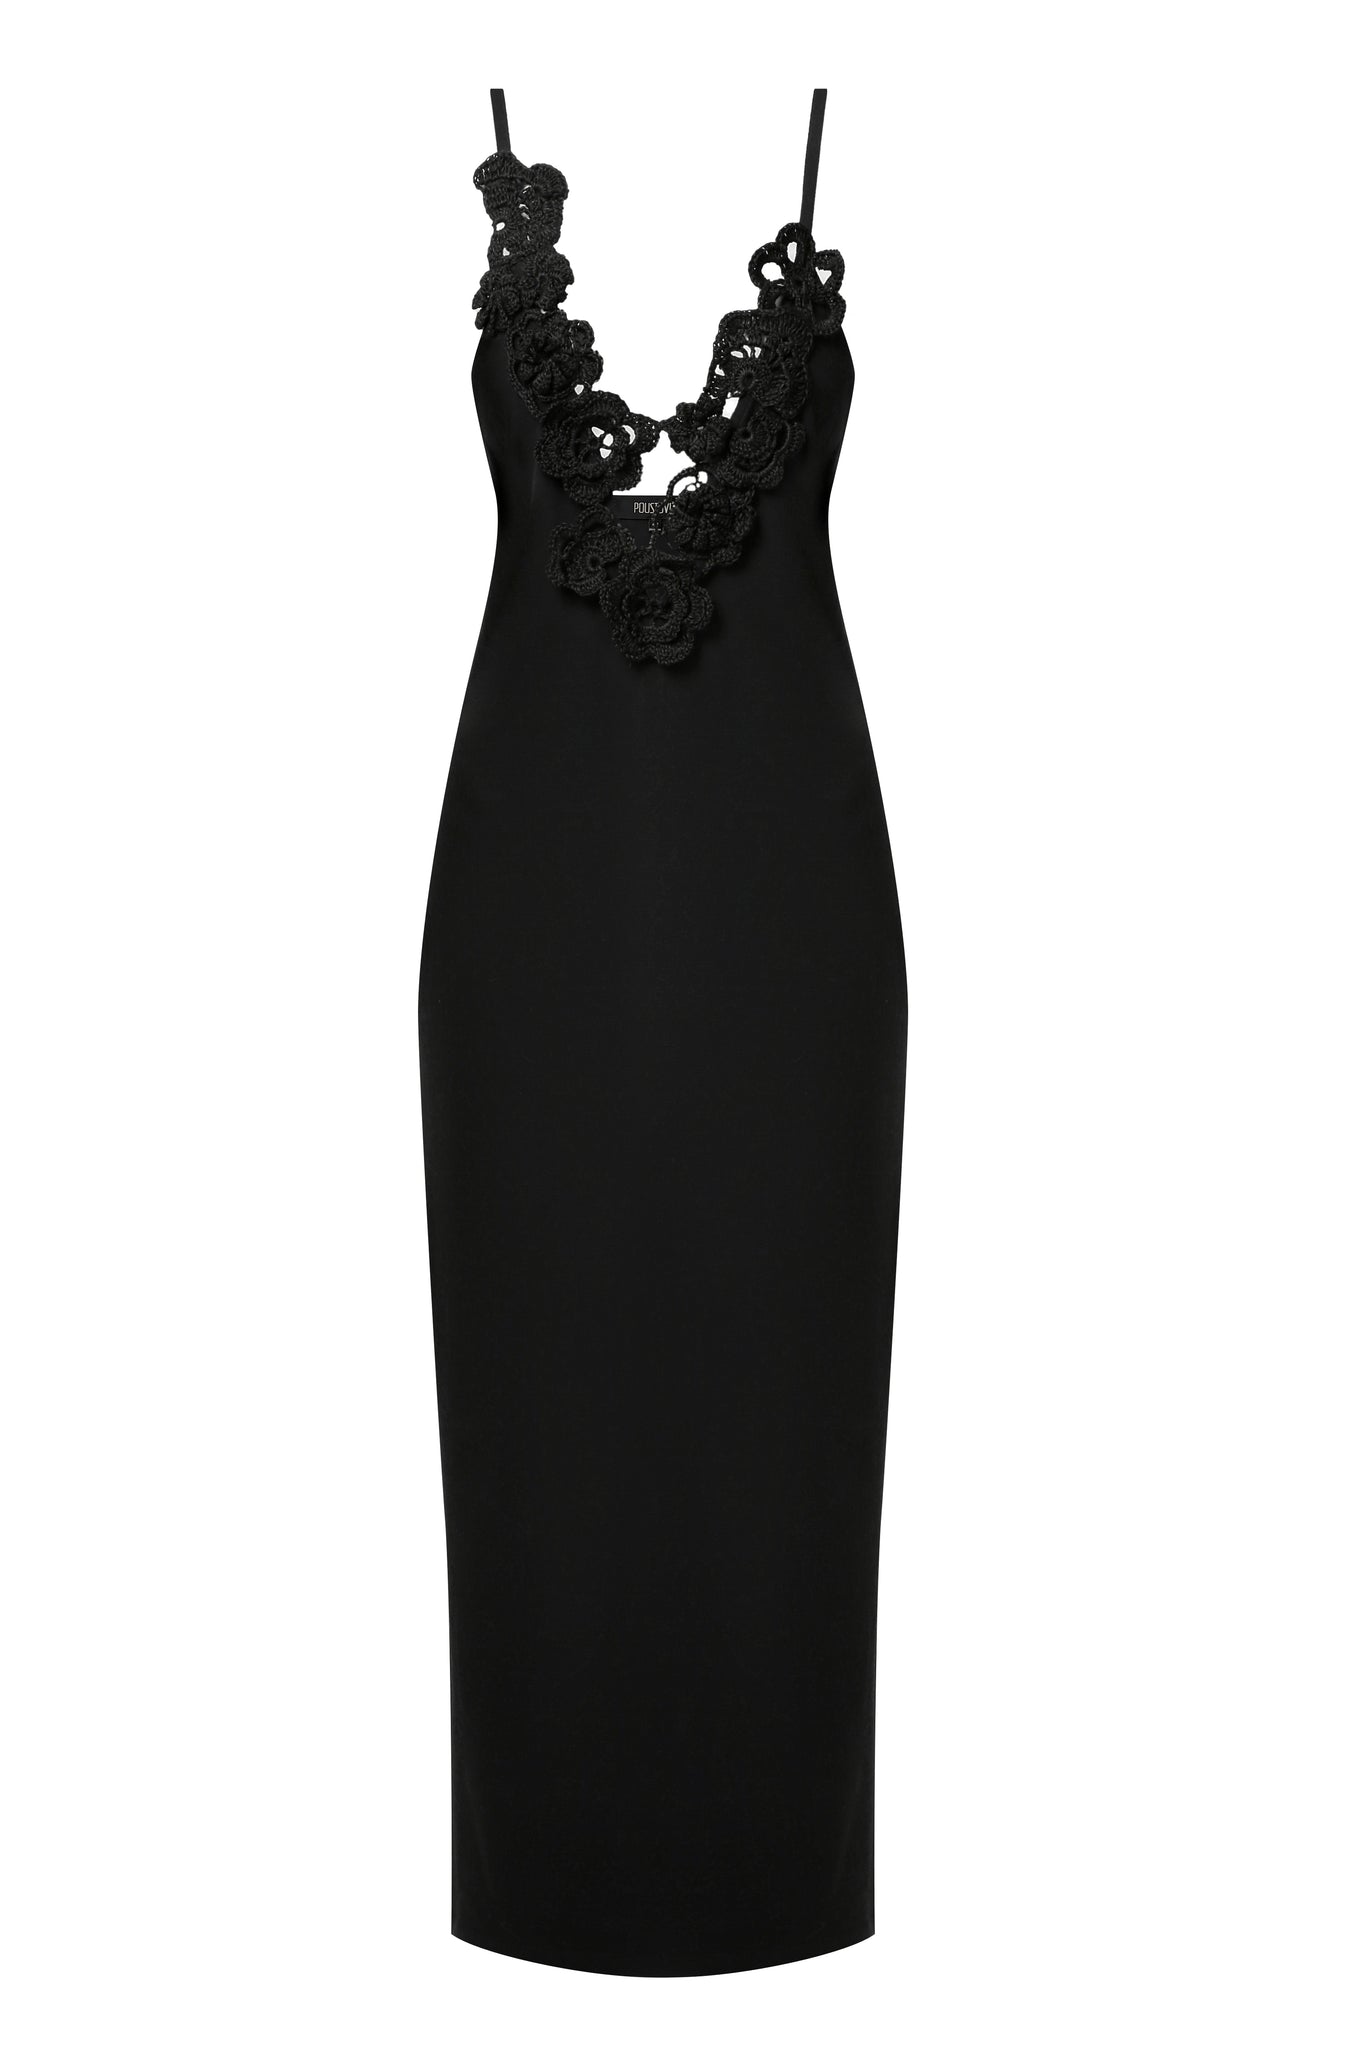 Black slip-dress with hand-knit details